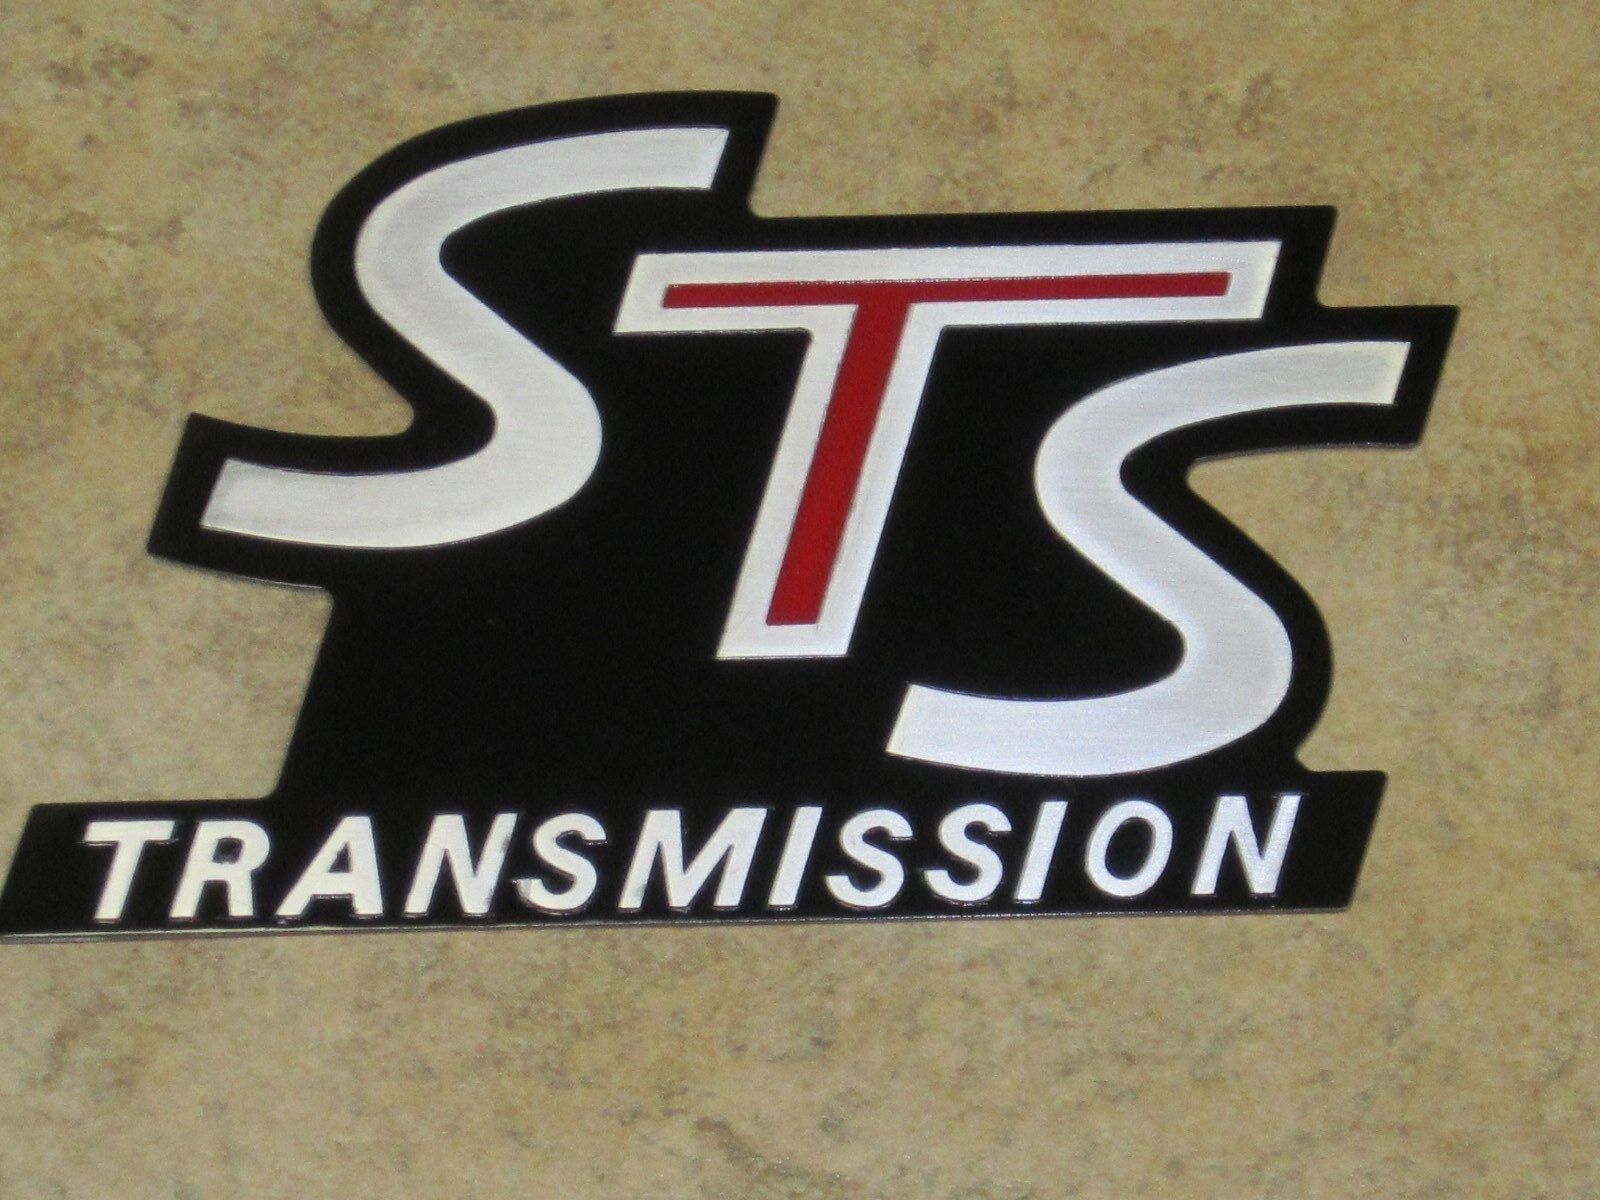 IH Farmall International 7288-7488 Tractor STS Transmission side hood emblem 